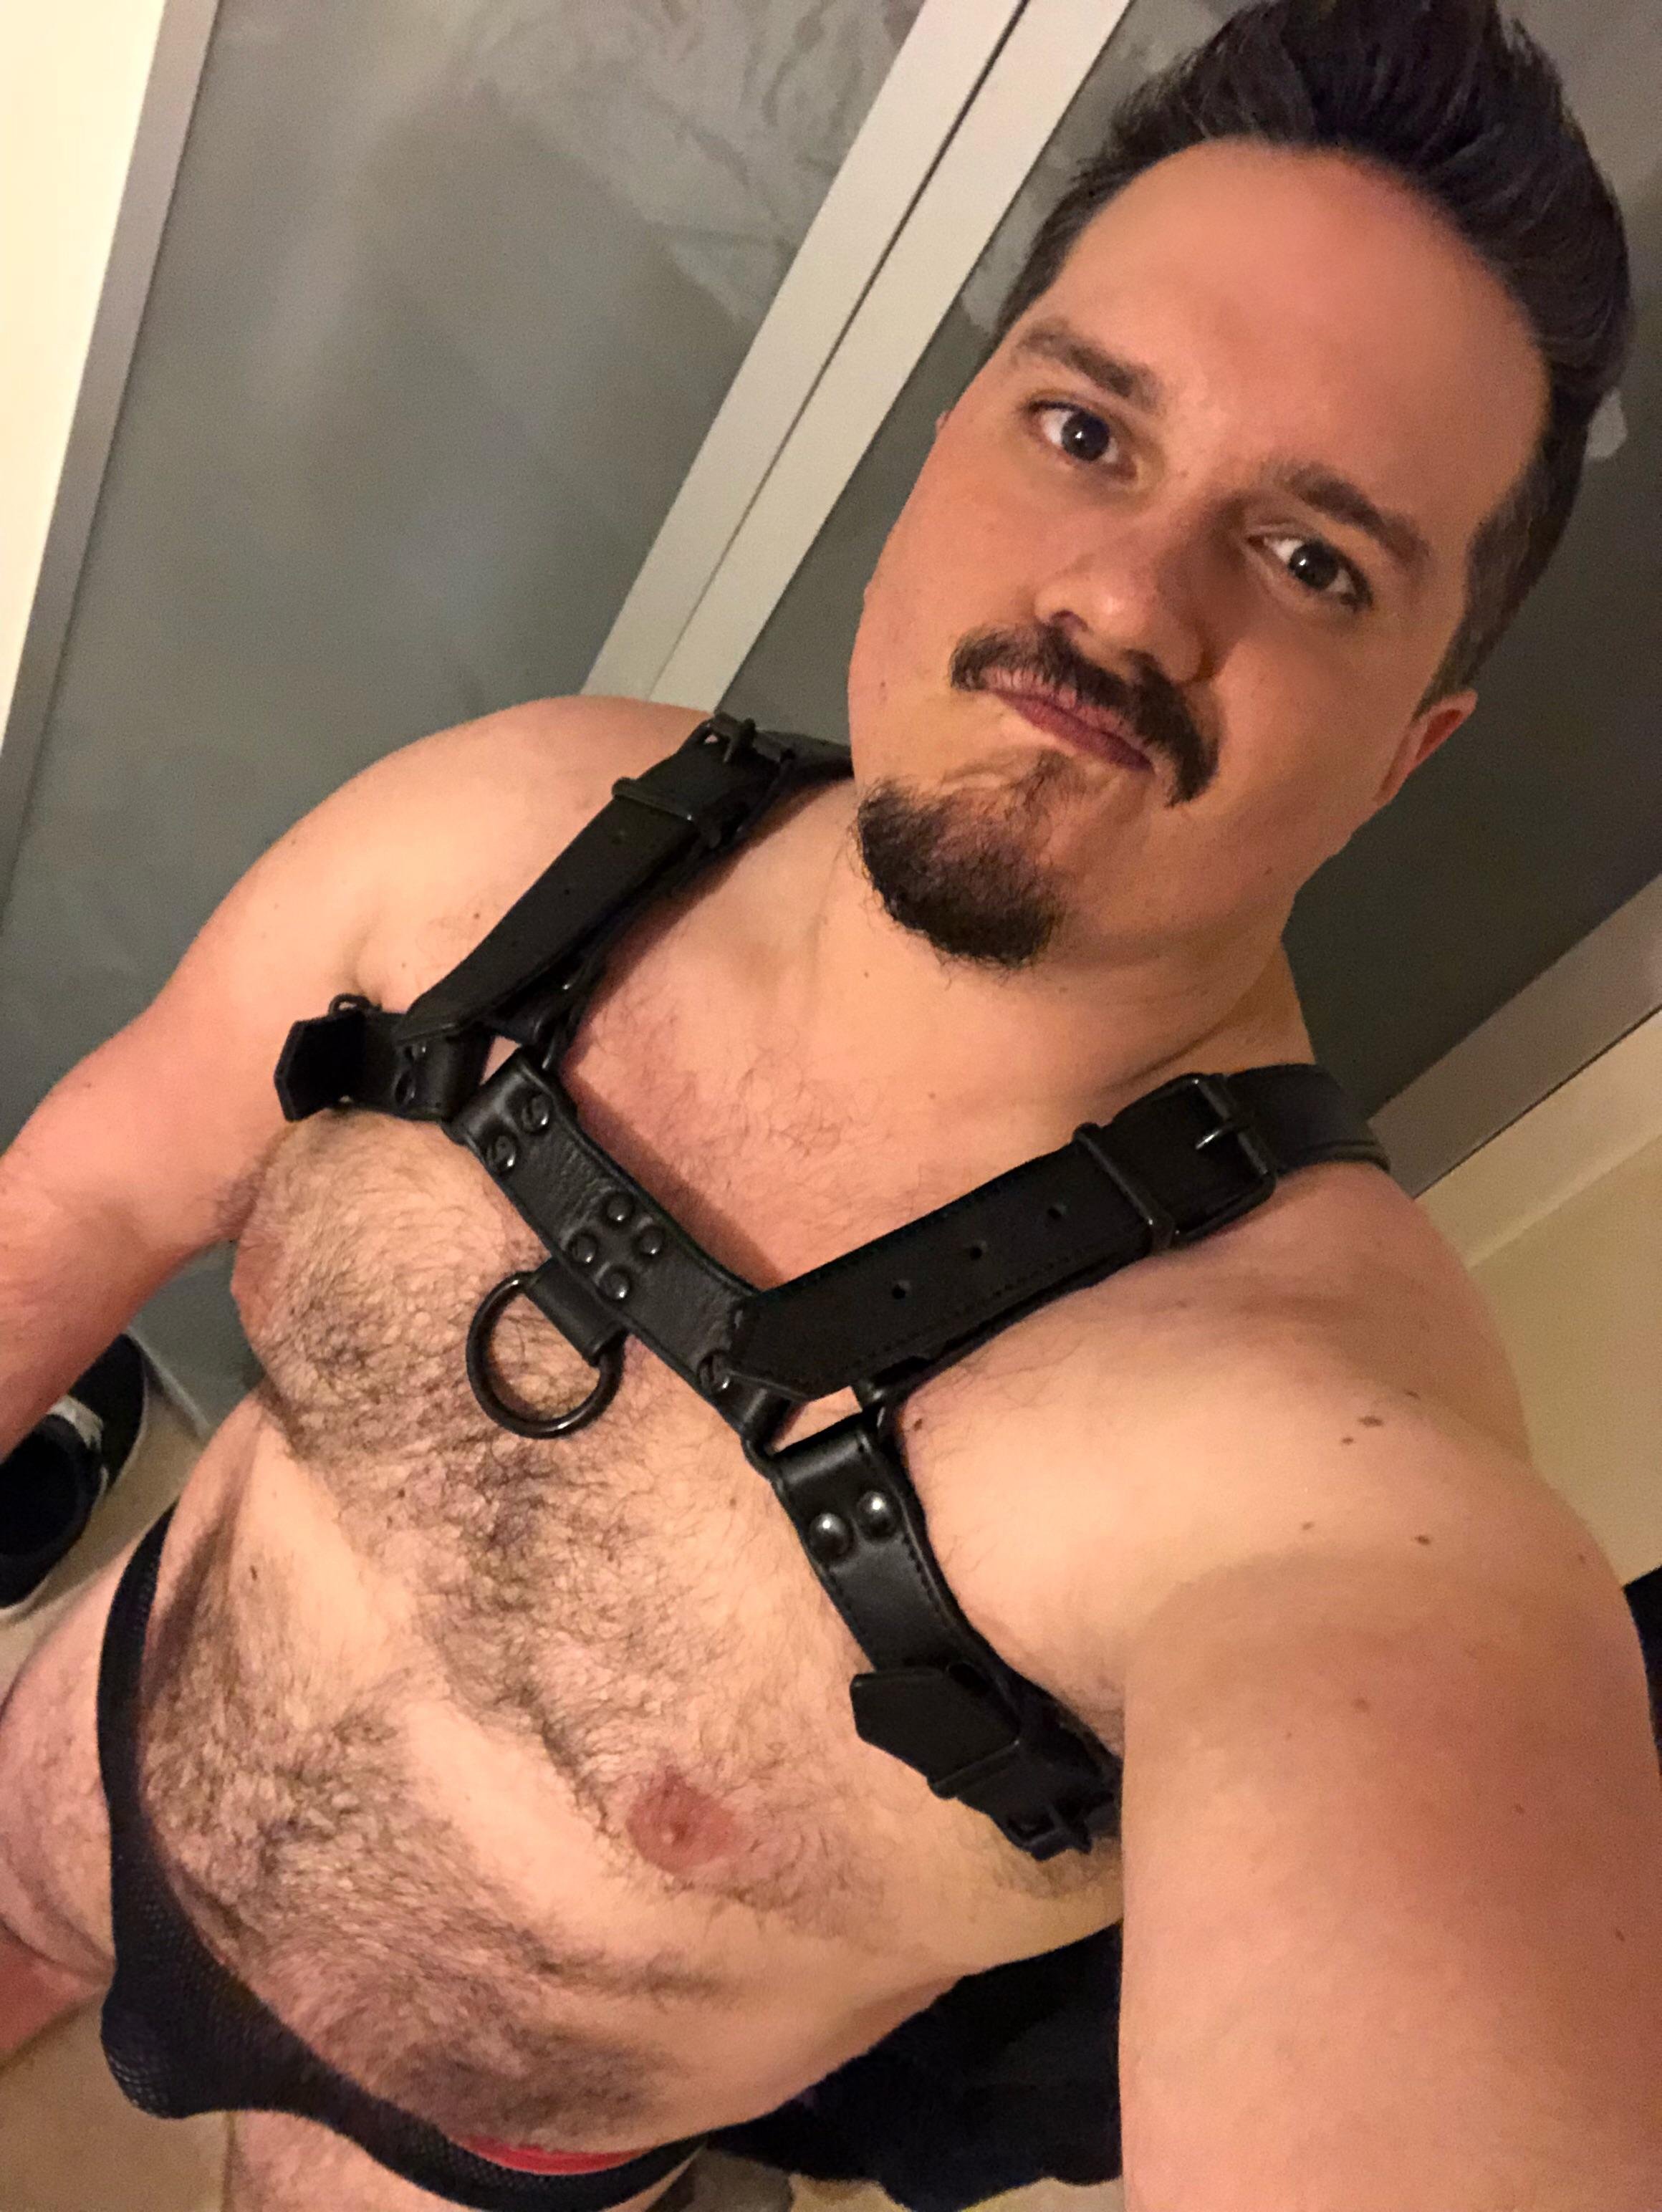 Loving my new harness!!!